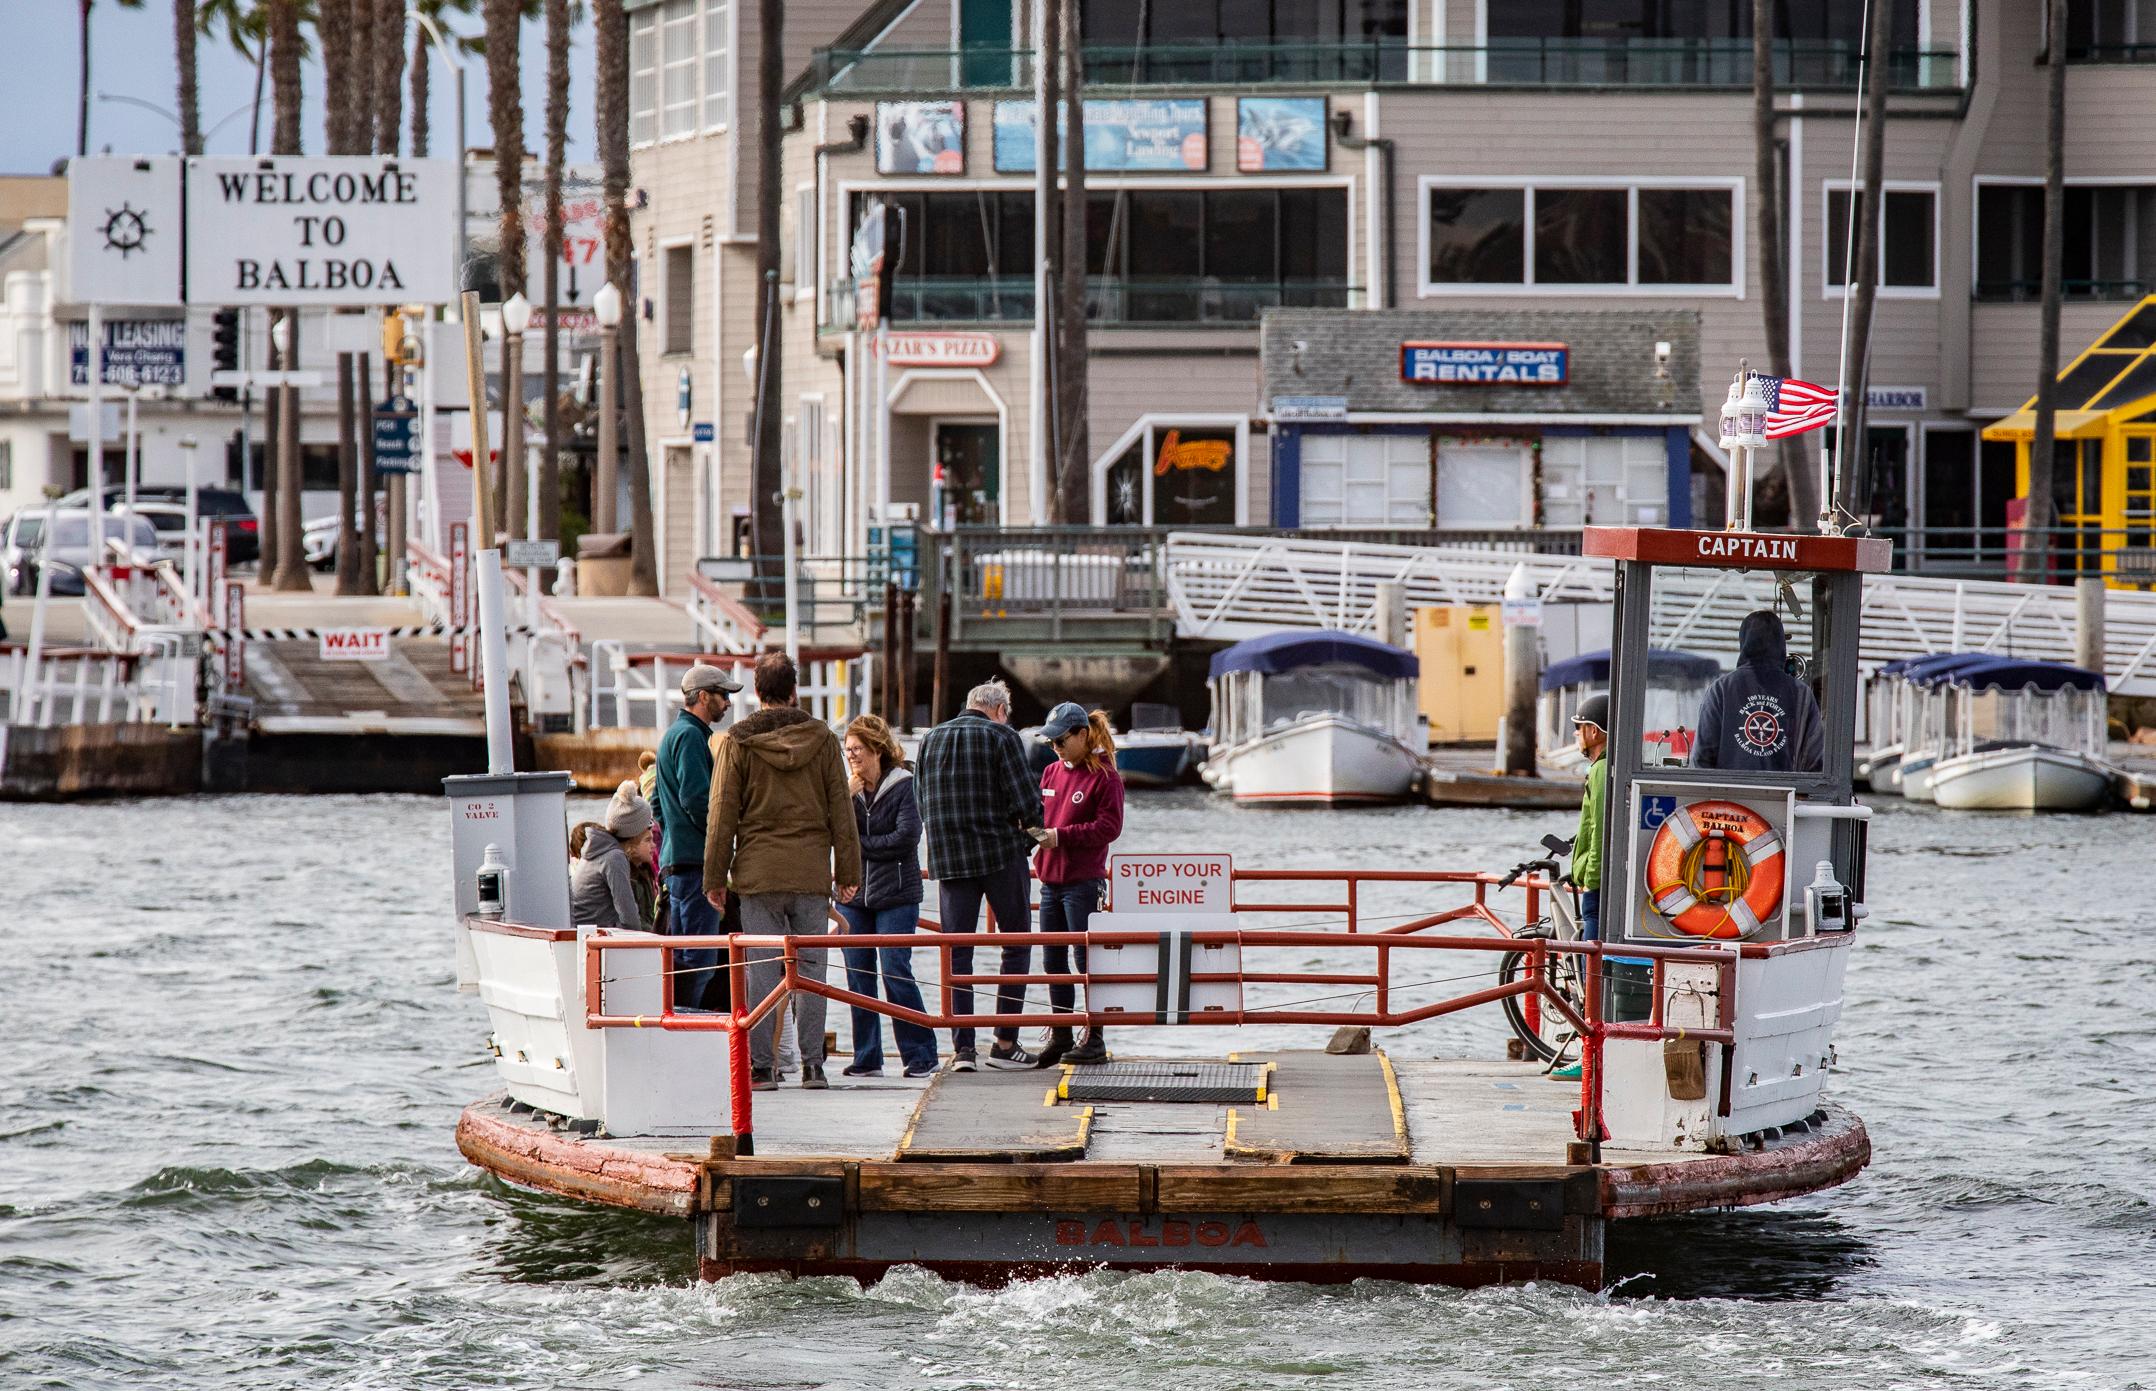 Balboa Island Ferry Gets $8.3 Million Grant to Go Electric